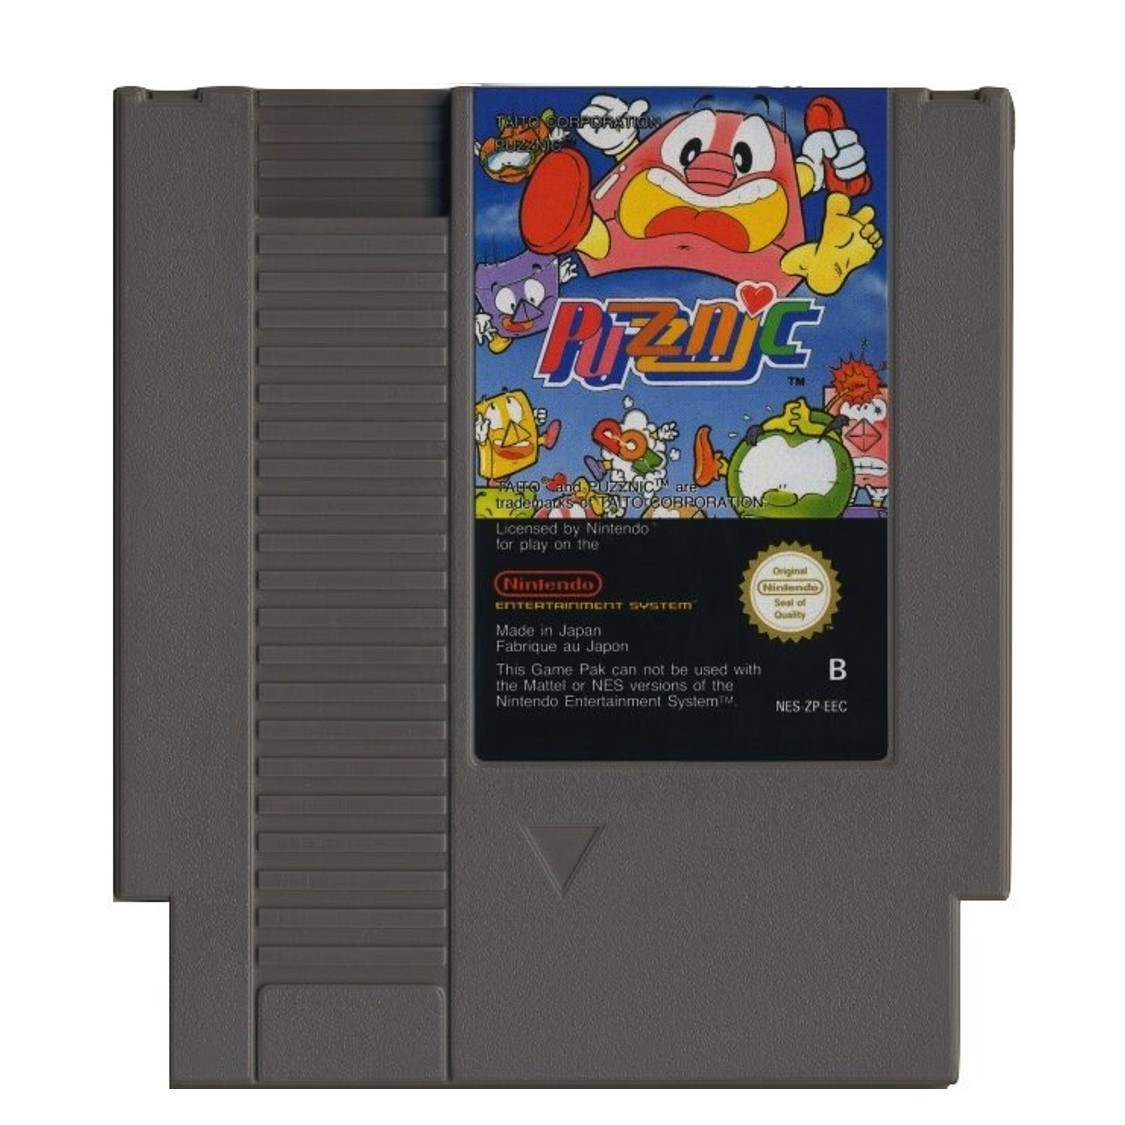 Puzznic - Nintendo NES Games